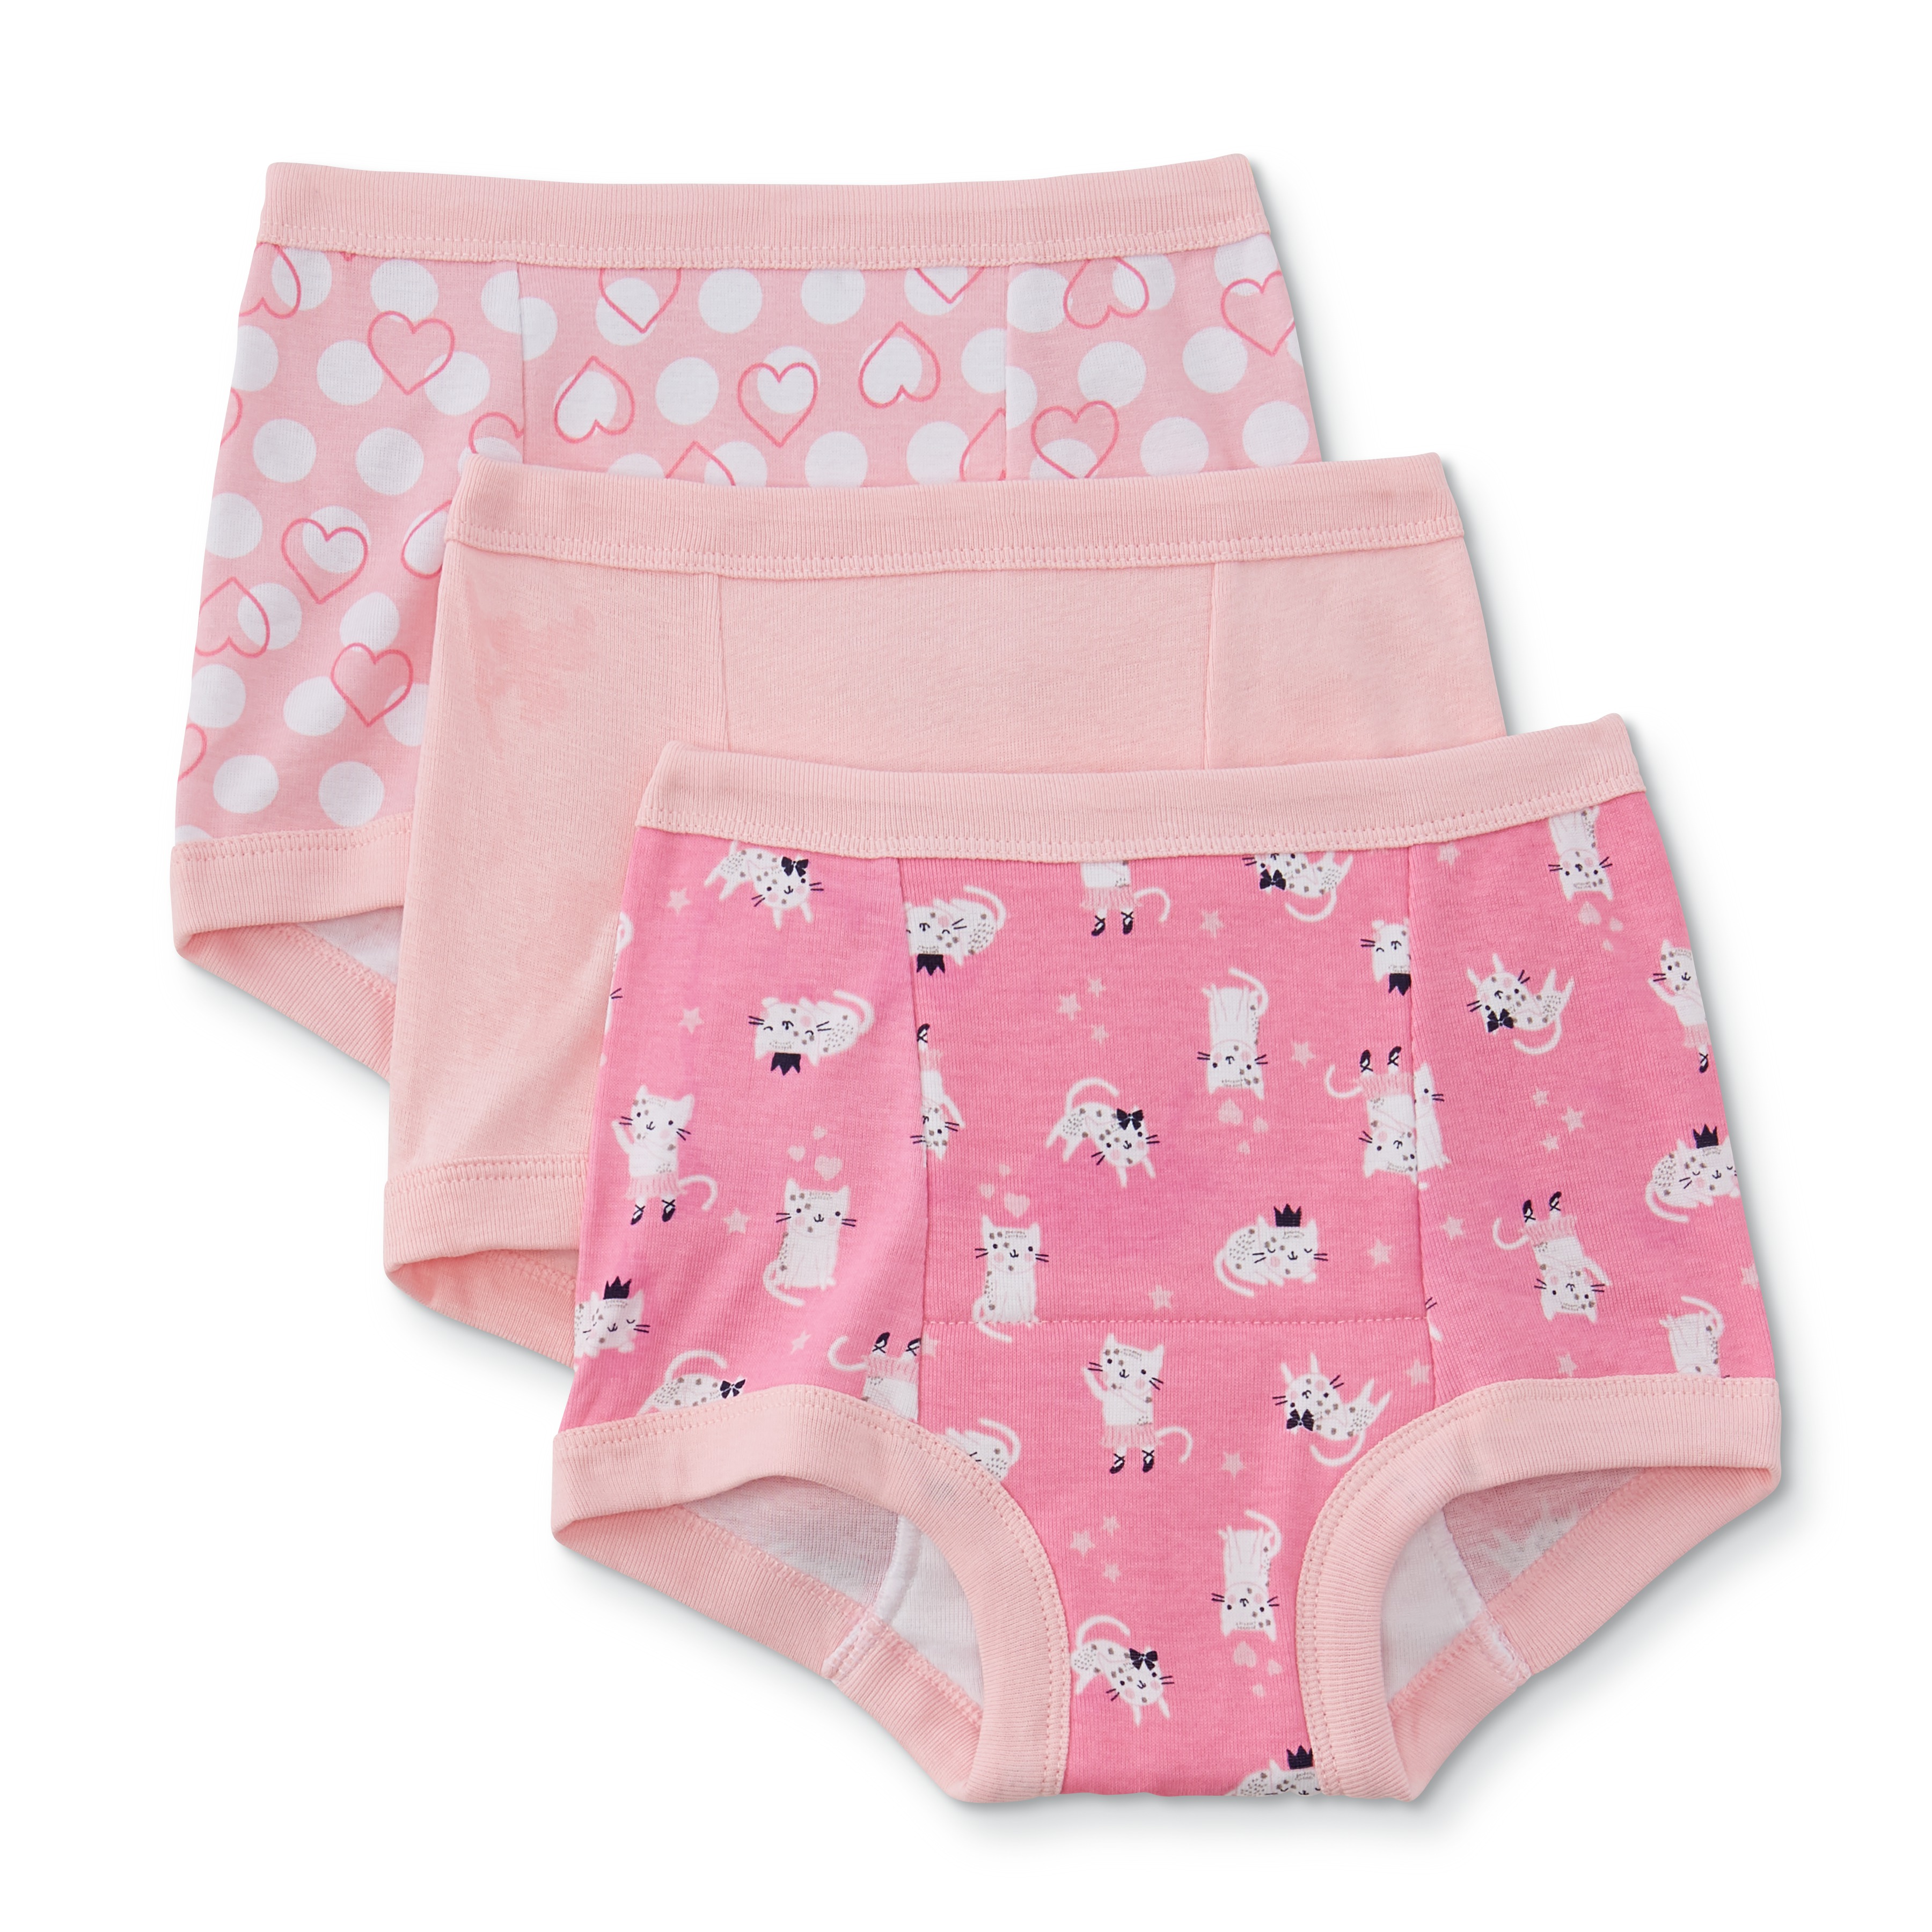 Simply Styled  Toddler Girls' Briefs Underwear 3-Pack